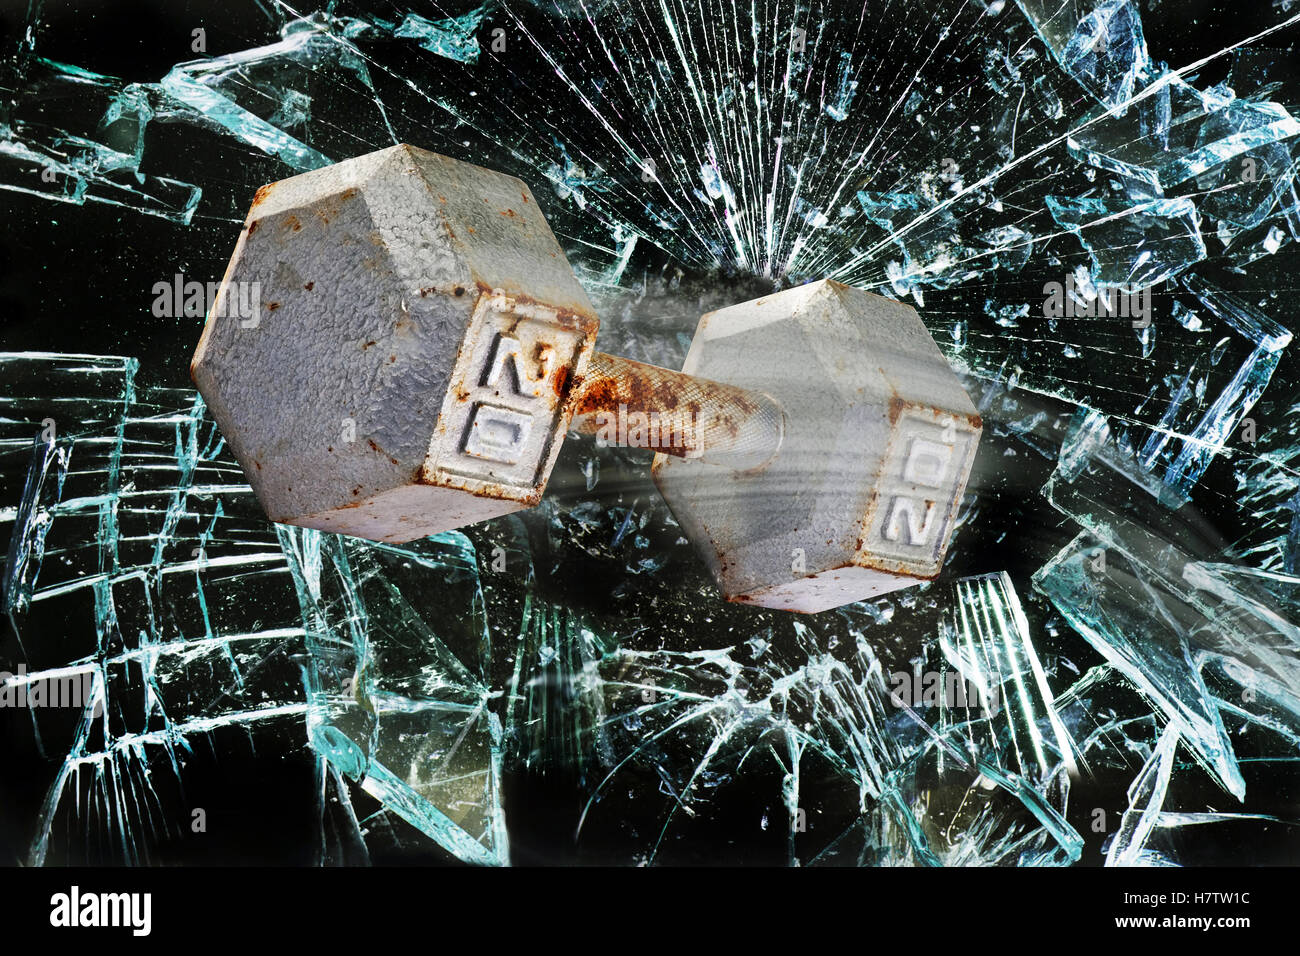 Dumbbell weight through broken glass window. Stock Photo